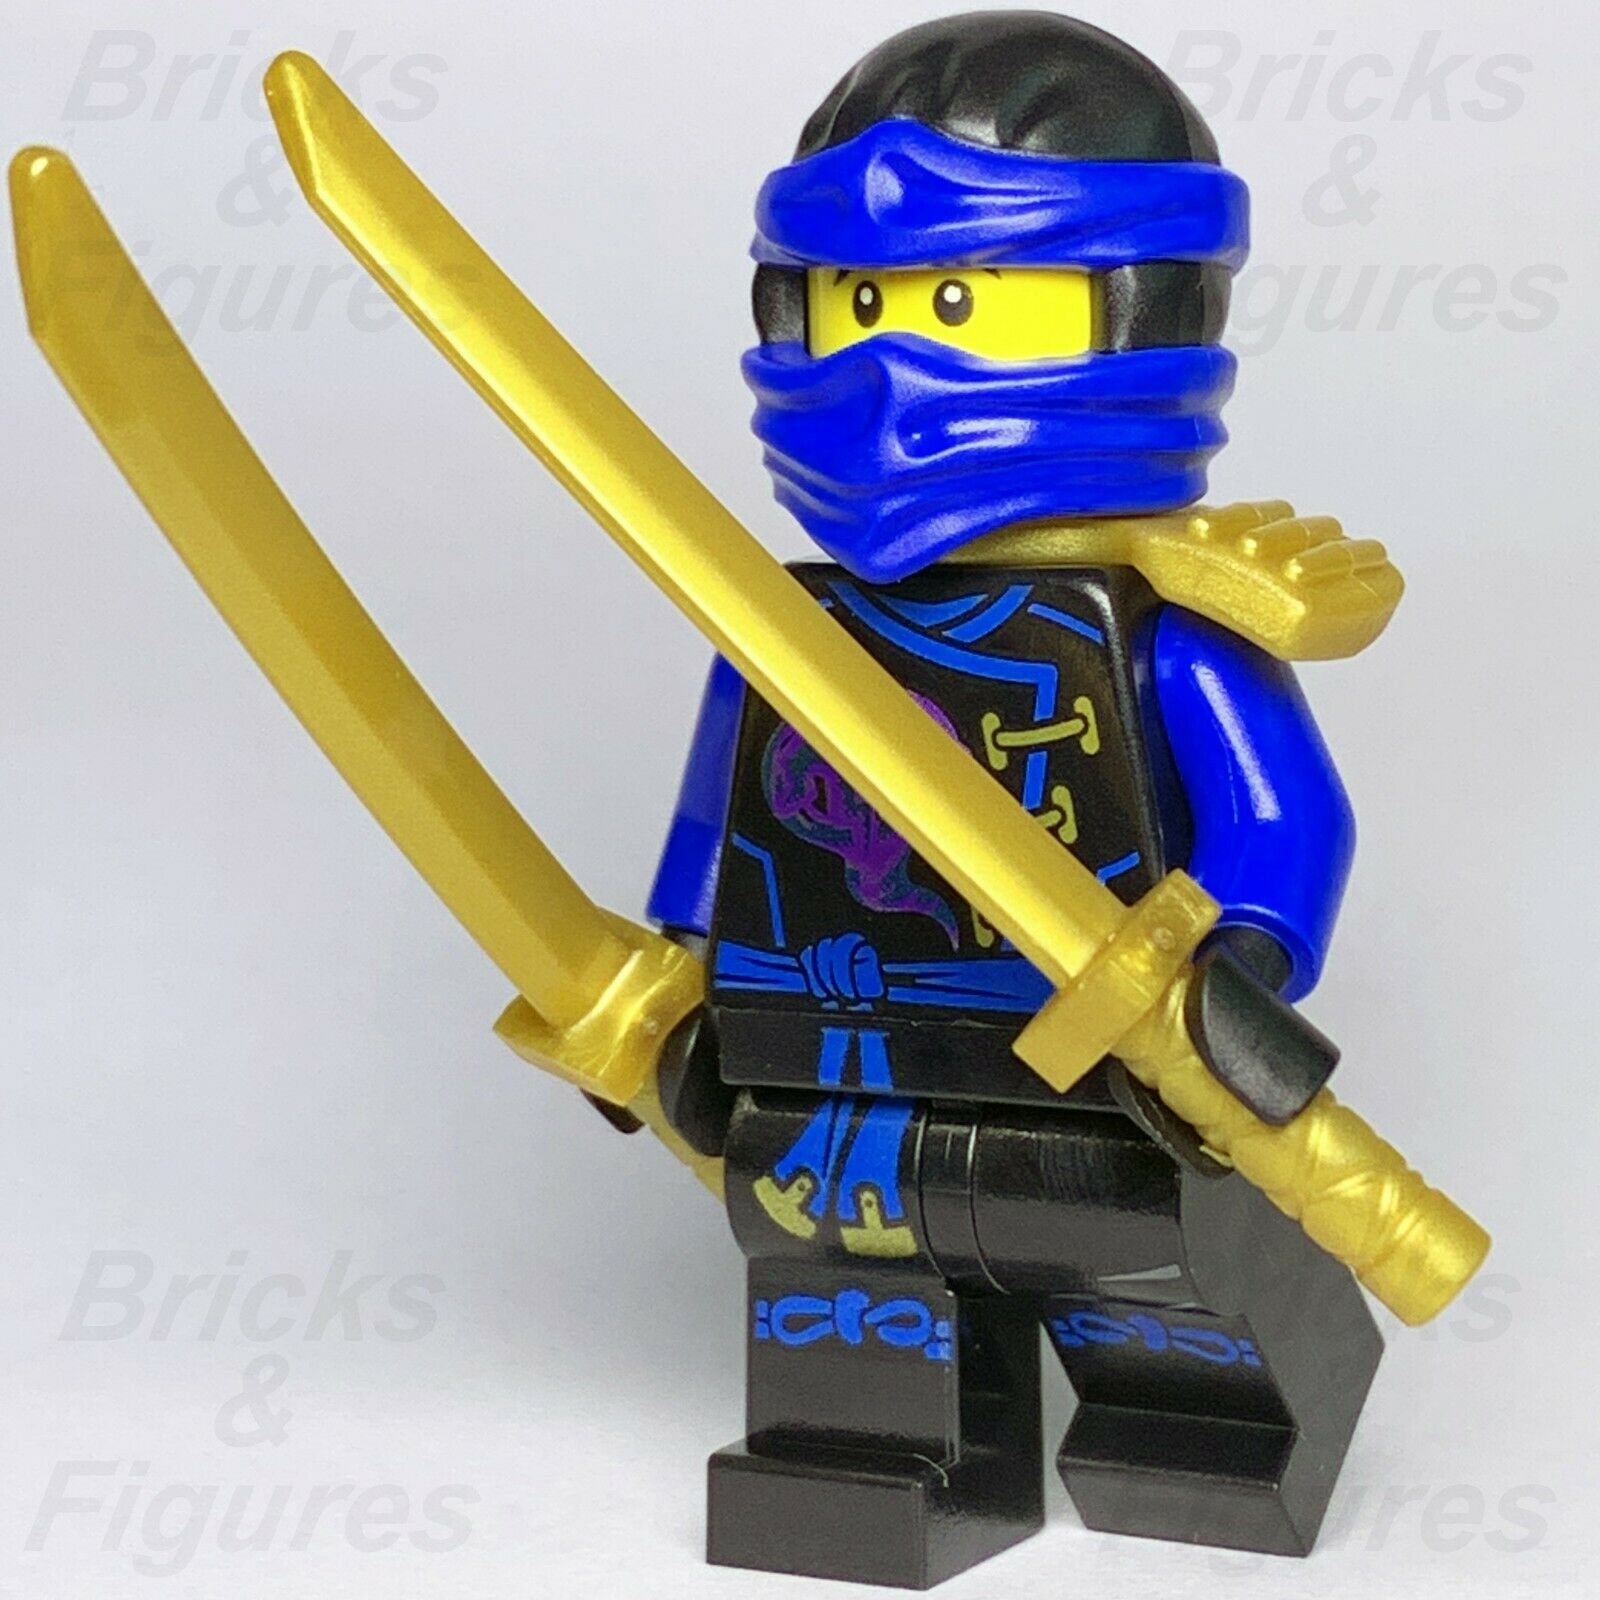 New Genuine Ninjago LEGO Ninja Jay Skybound Minifigure from set 70602 - Bricks & Figures